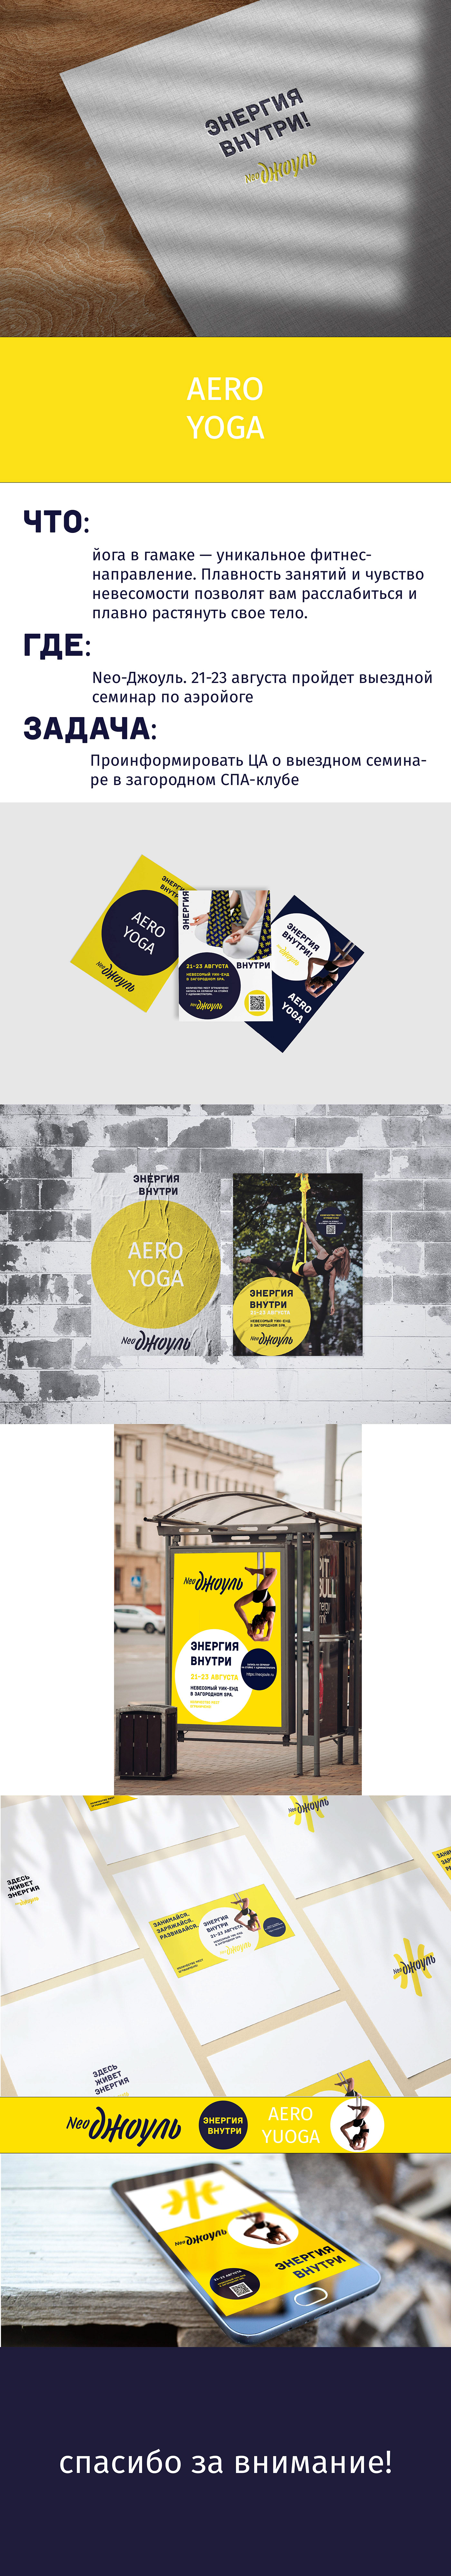 aero Yoga kv key visual marketing   designer adobe illustrator Graphic Designer brand identity design